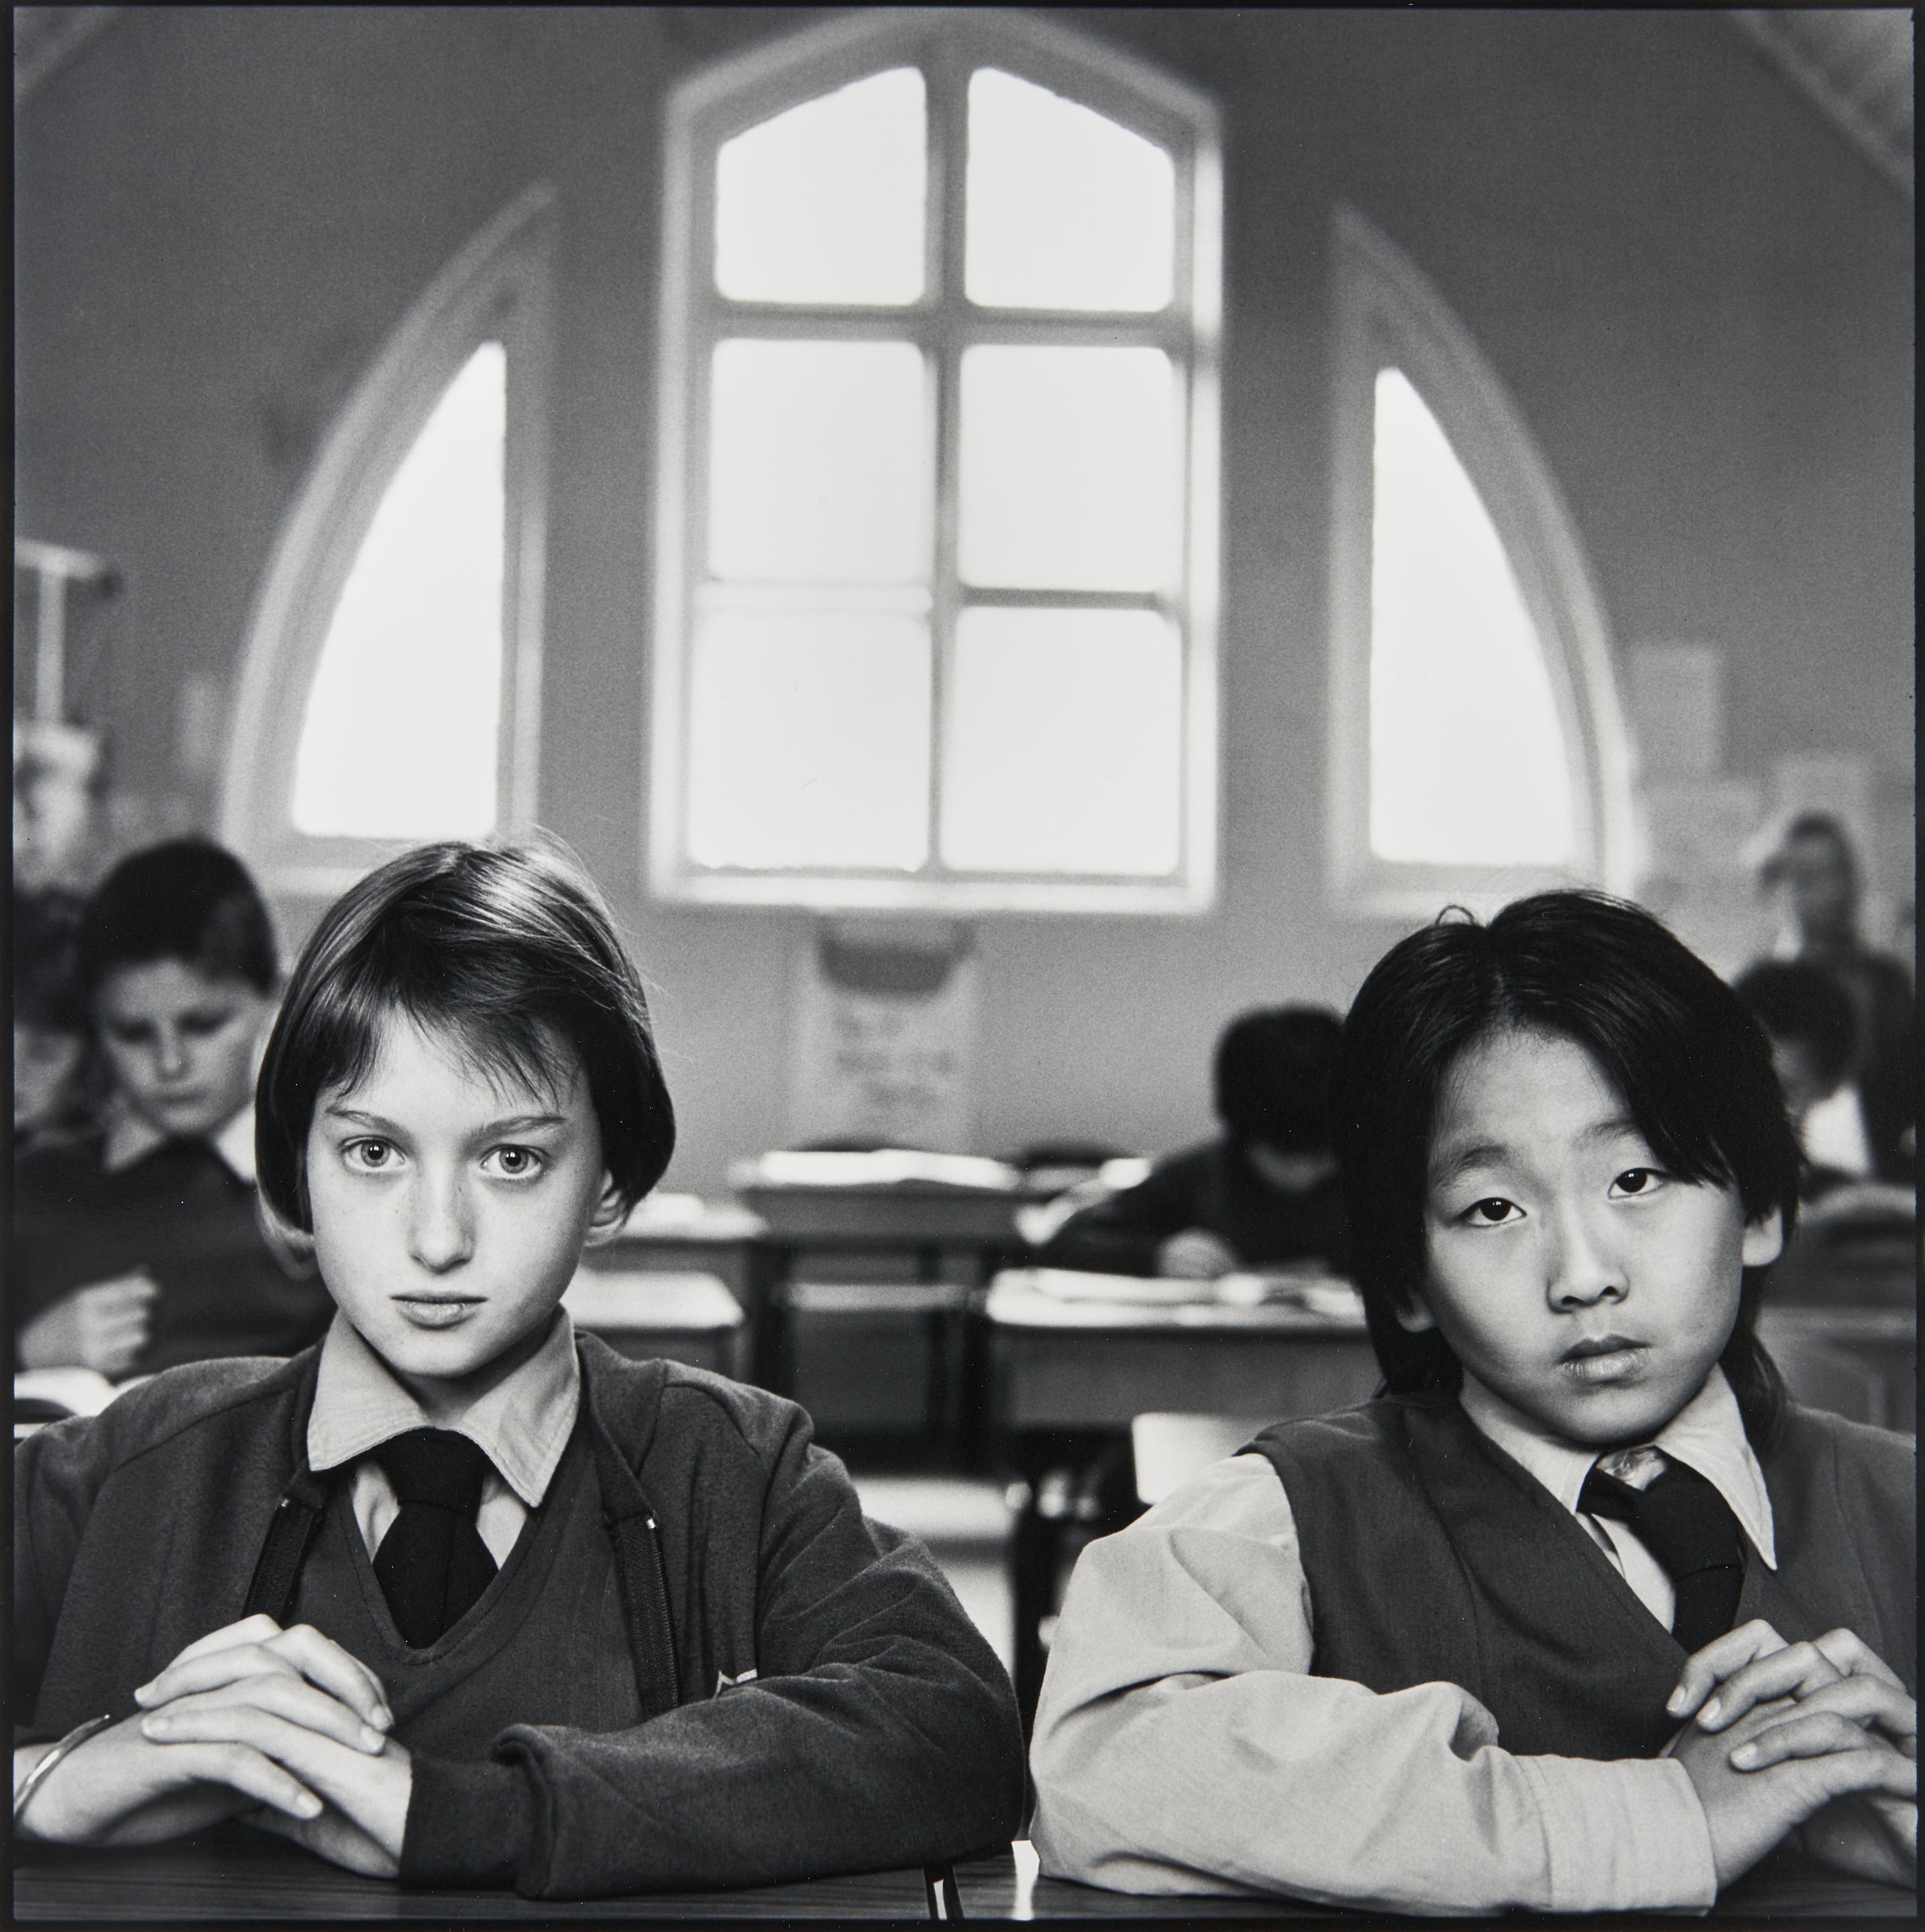 St. Mary's Catholic Primary School, Australia by Mary Ellen Mark, 1987